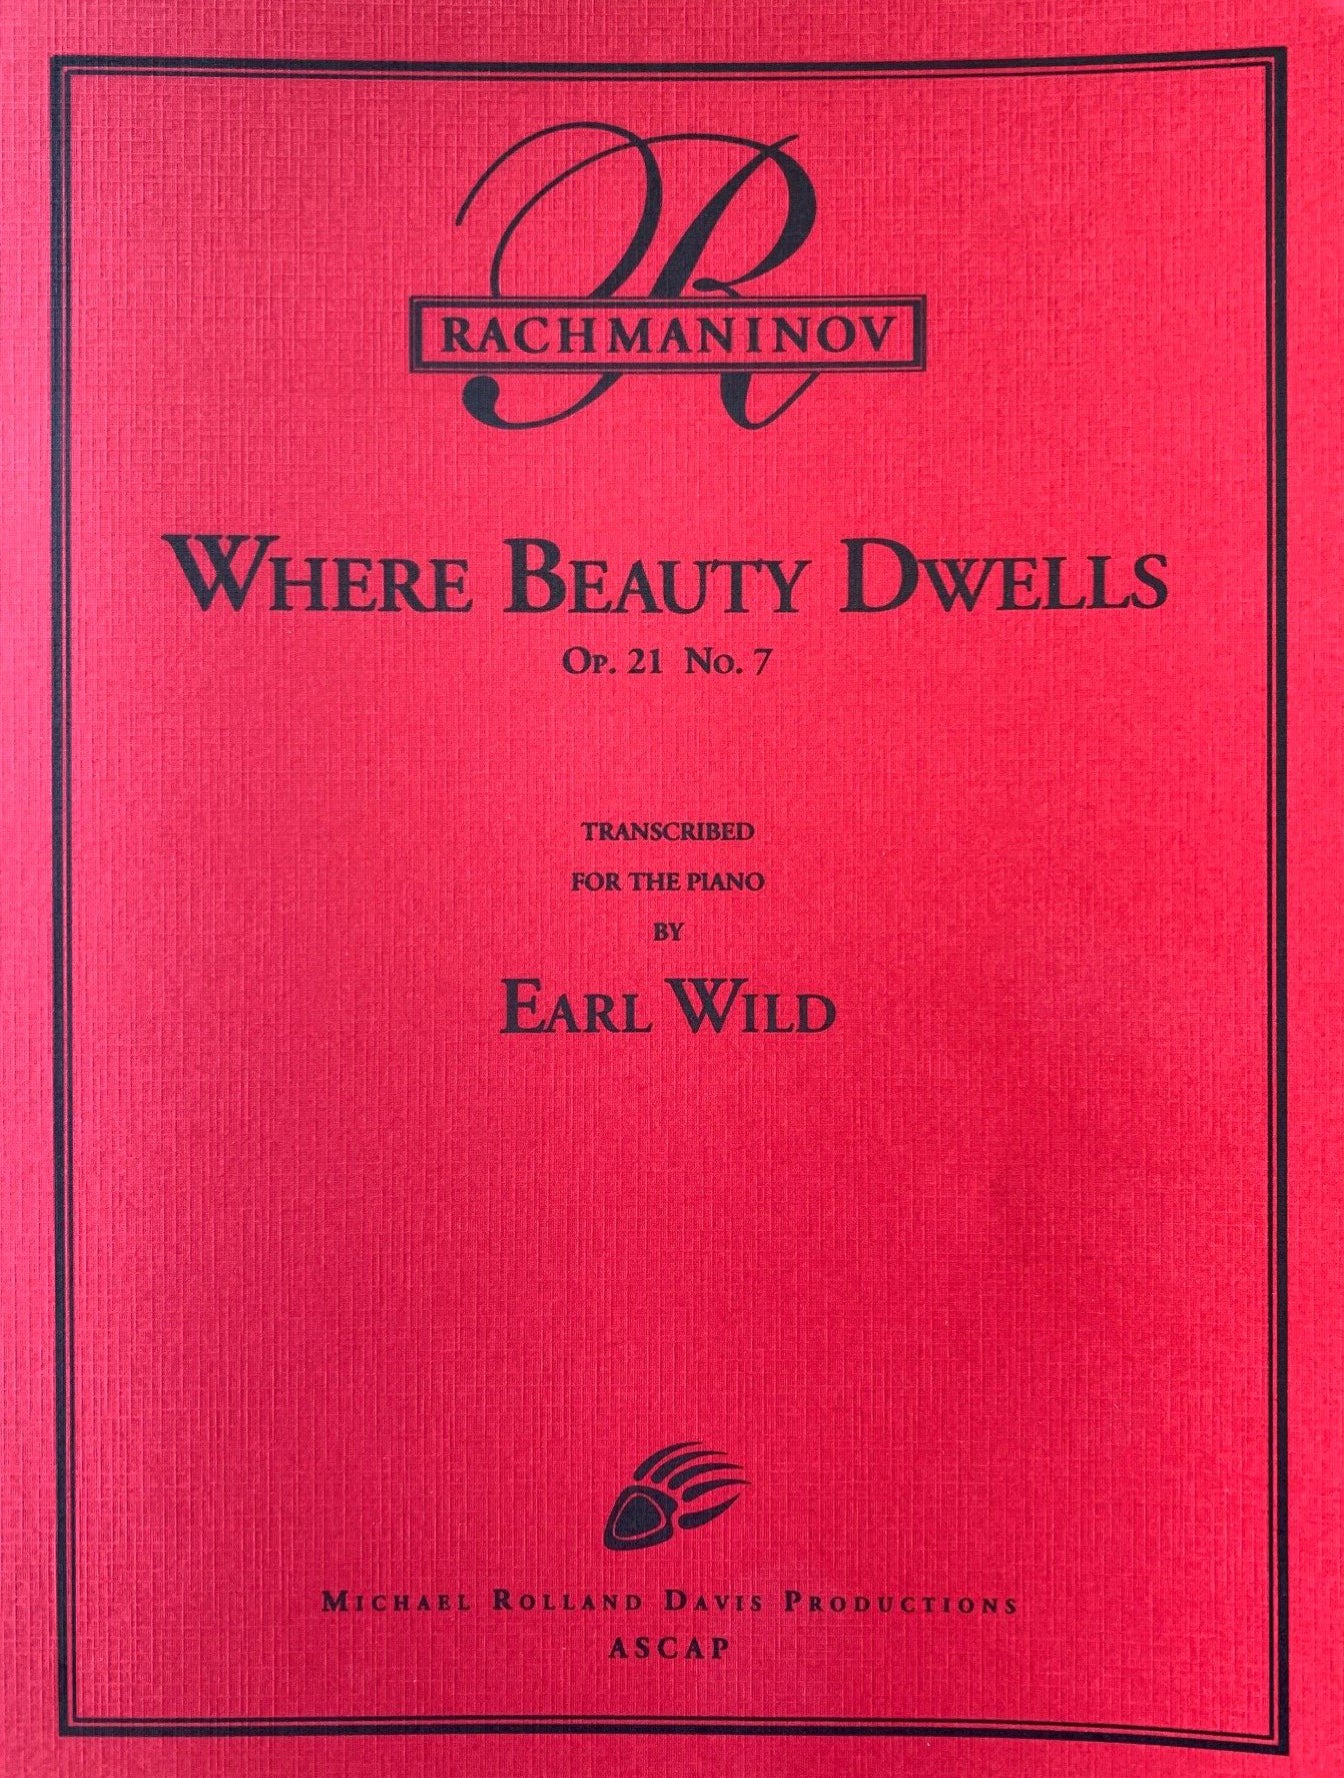 Rachmaninov-Earl Wild: Where Beauty Dwells, Op. 21, No. 7